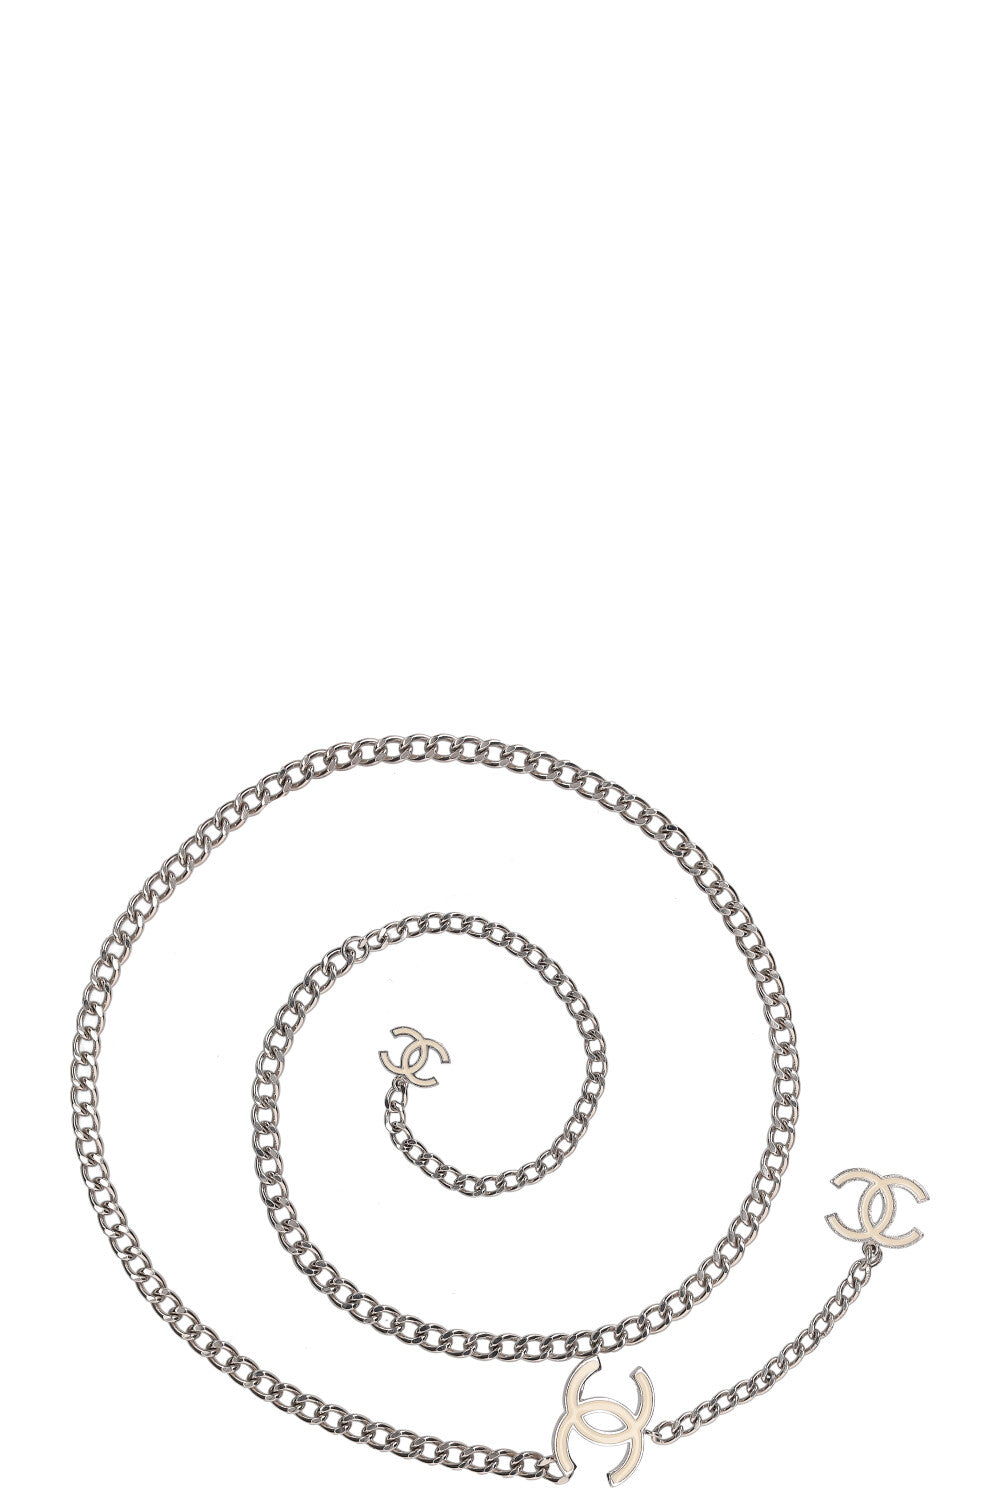 Belt Chanel Gold size M International in Chain - 30893332